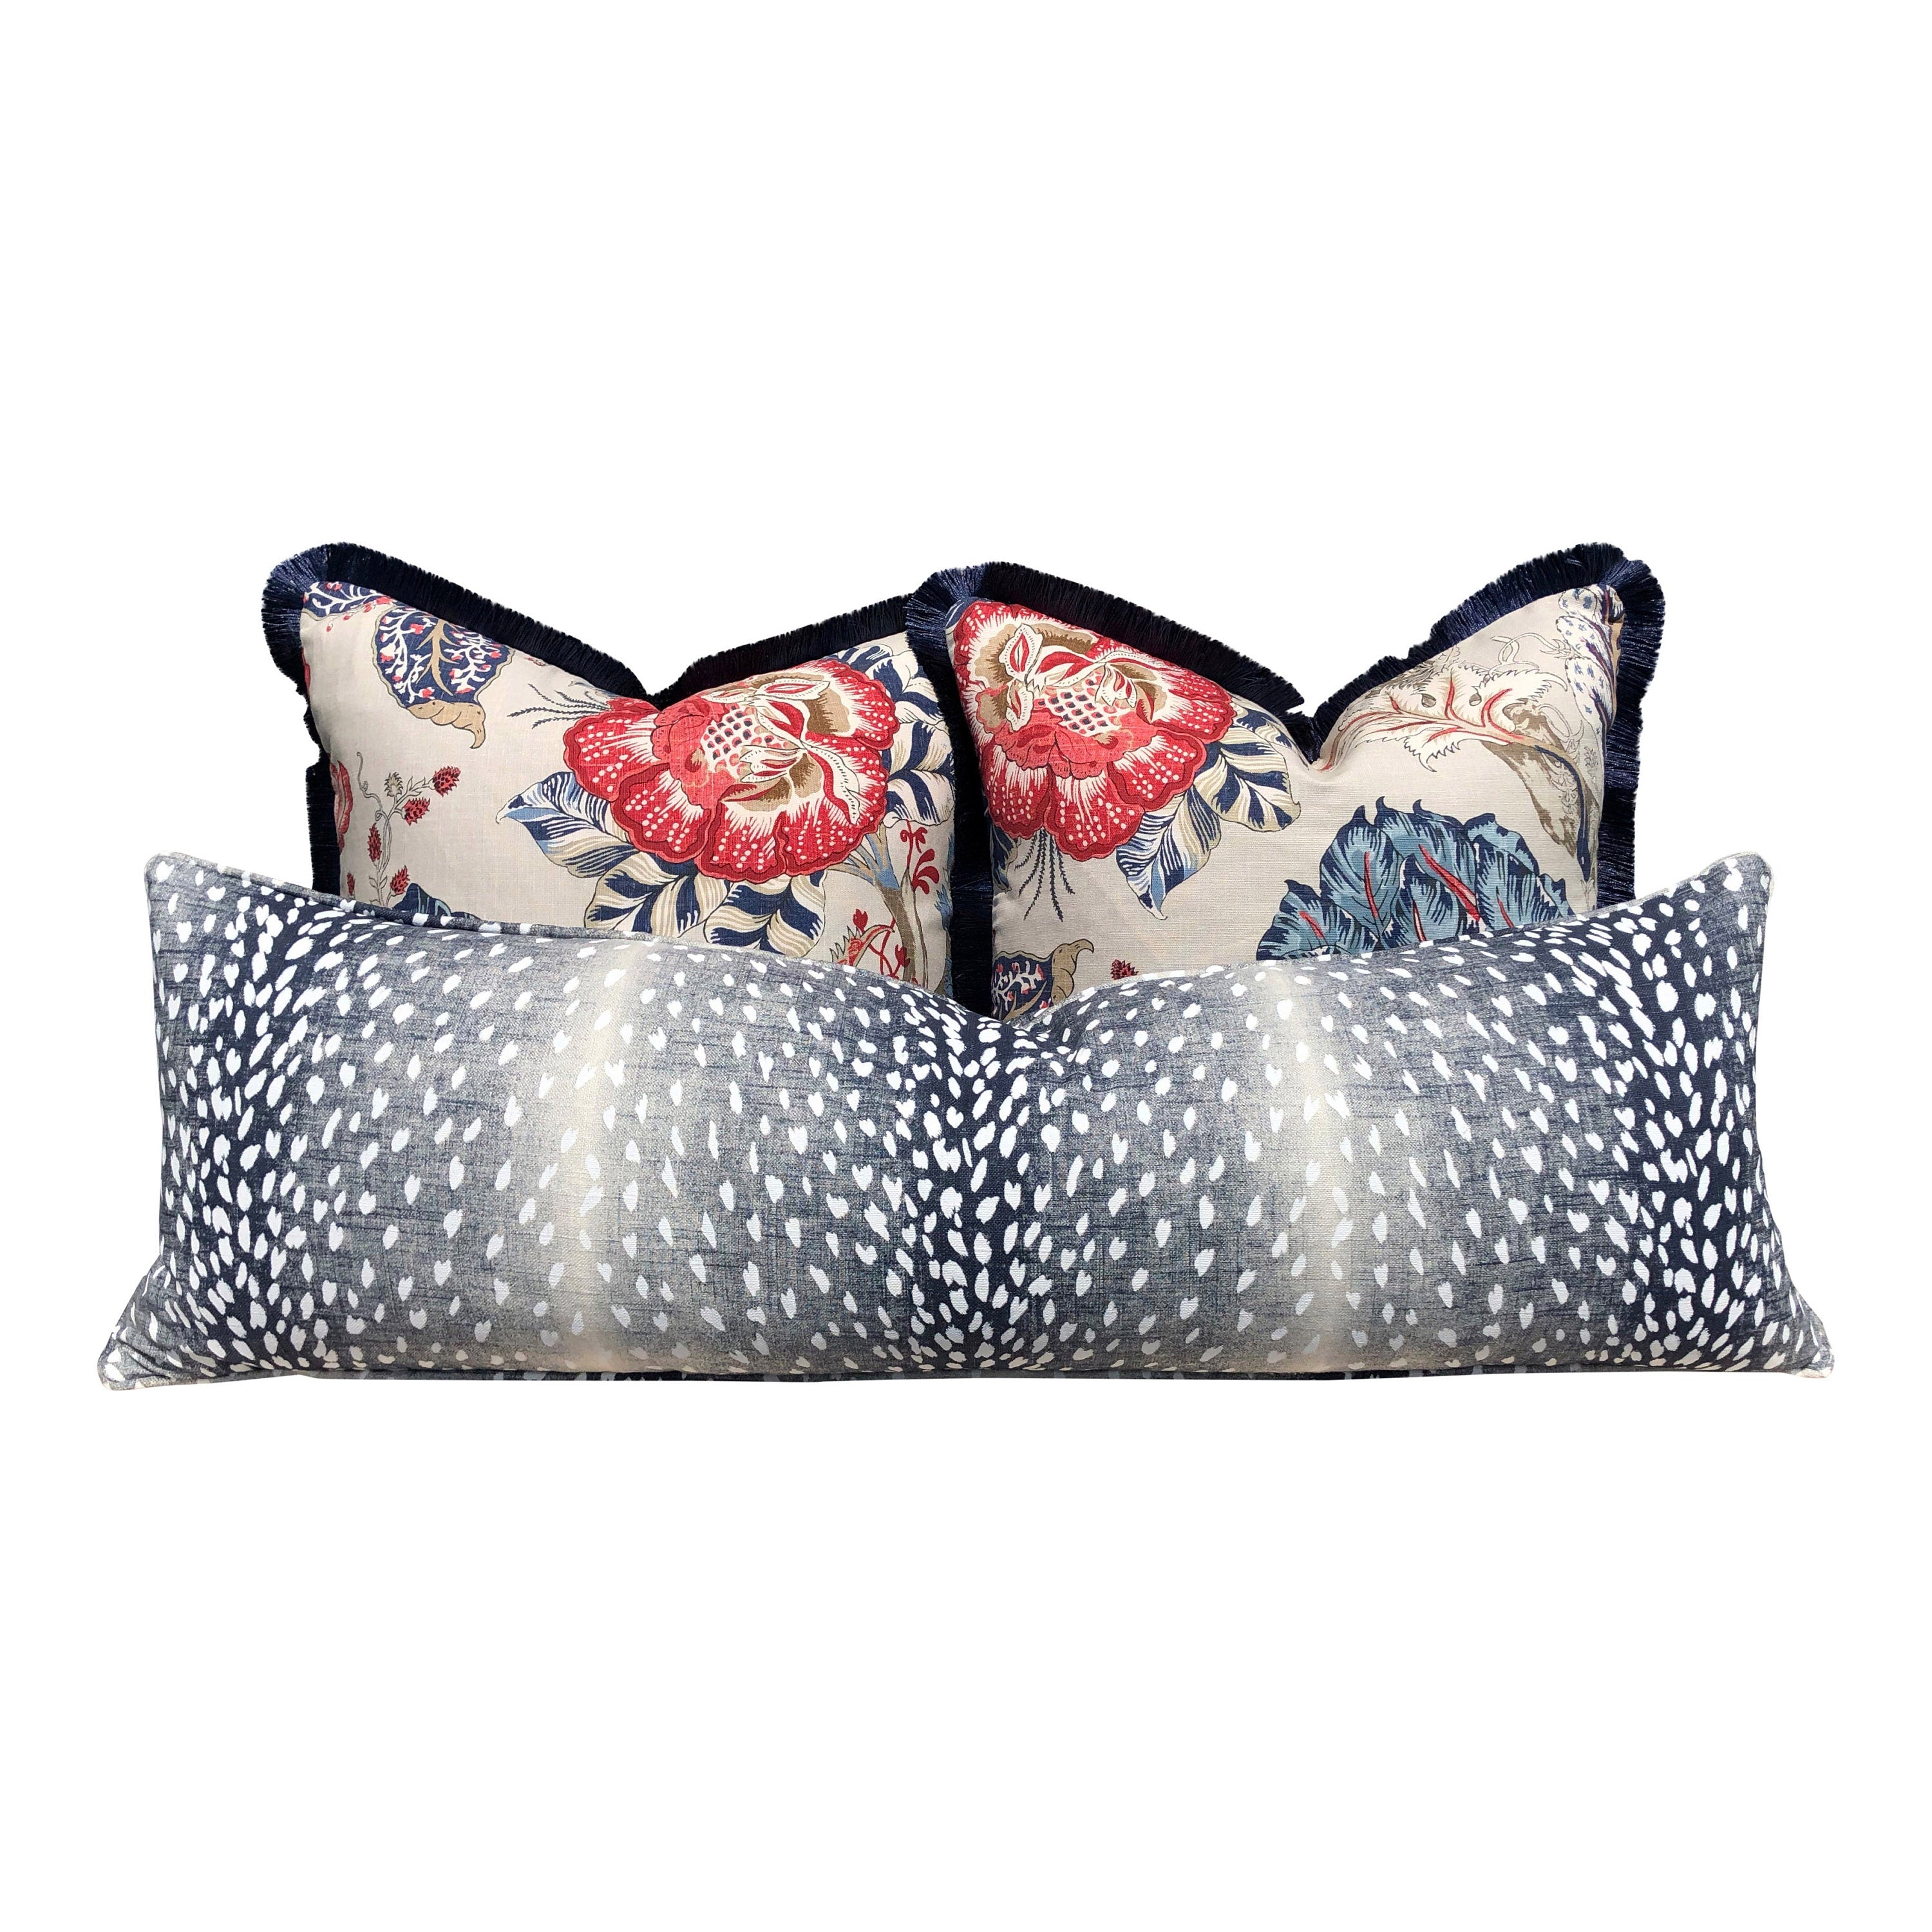 Kalamkari Pillow Red and Blue , Navy Brush Fringe. Lumbar Pillow, Chinoiserie Pillow, accent cushion cover, decorative pillow